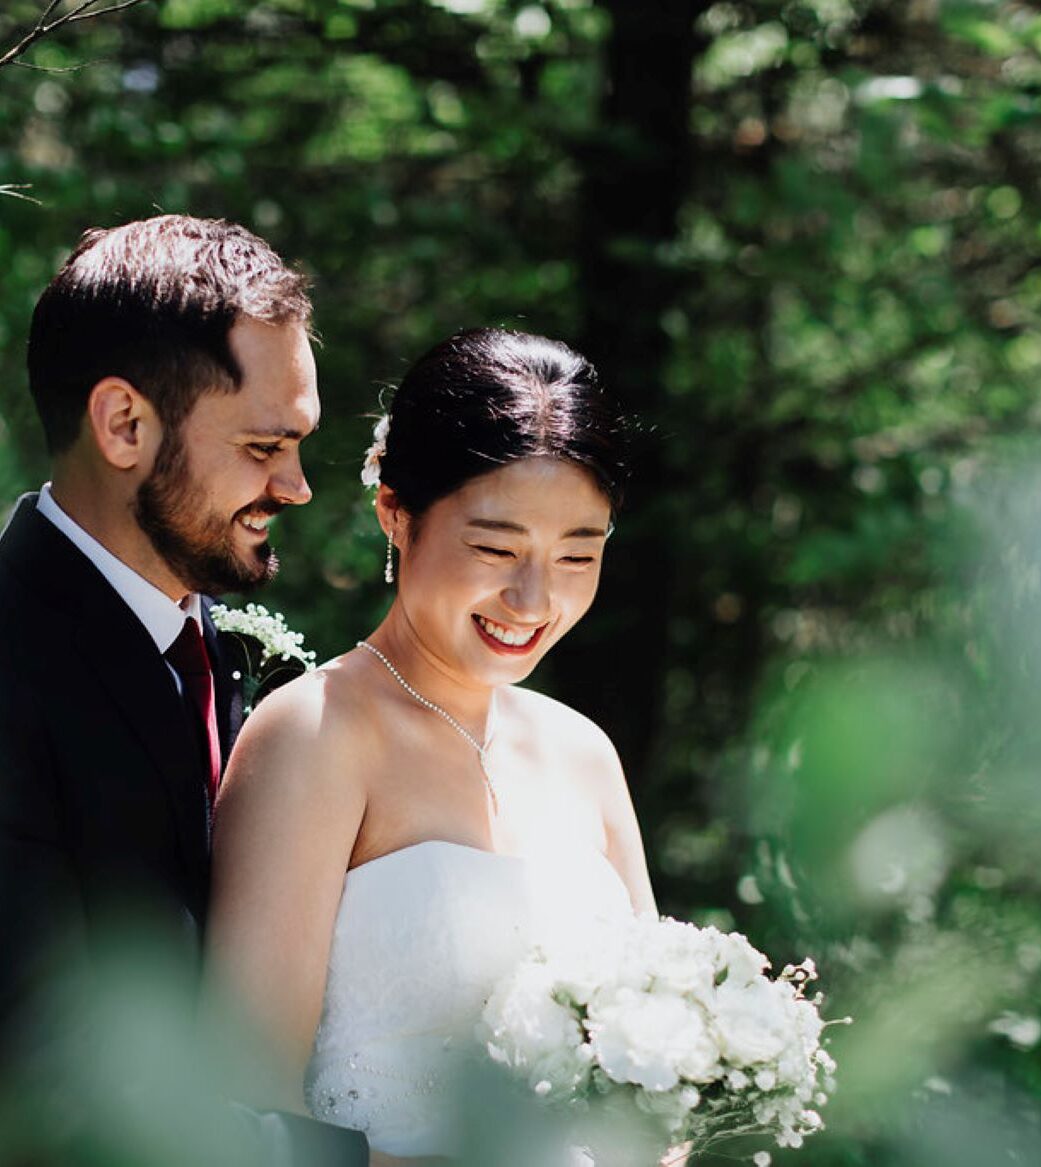 Heythrop Park Asian Wedding Photography - Ed Pereira